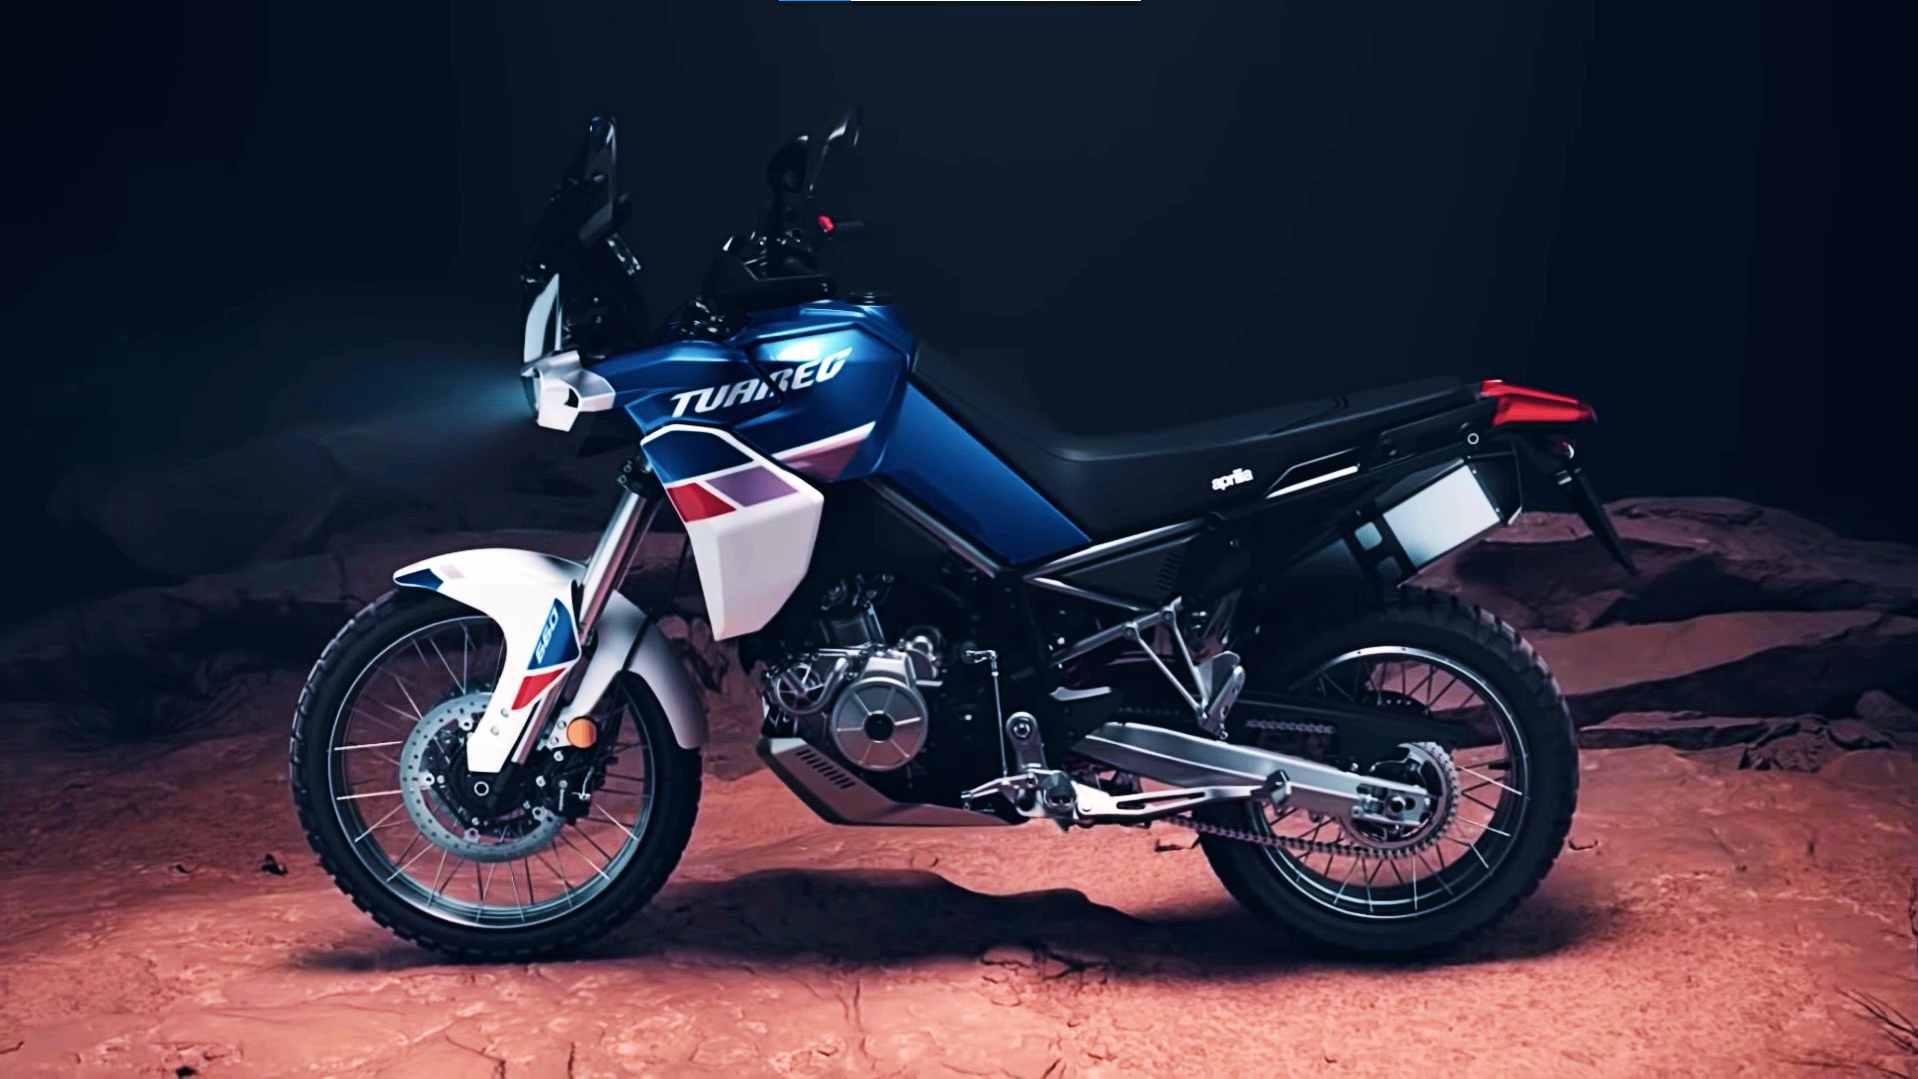 The Aprilia Tuareg's 660 cc parallel-twin makes 80 hp and 70 Nm of torque. Image: Aprilia